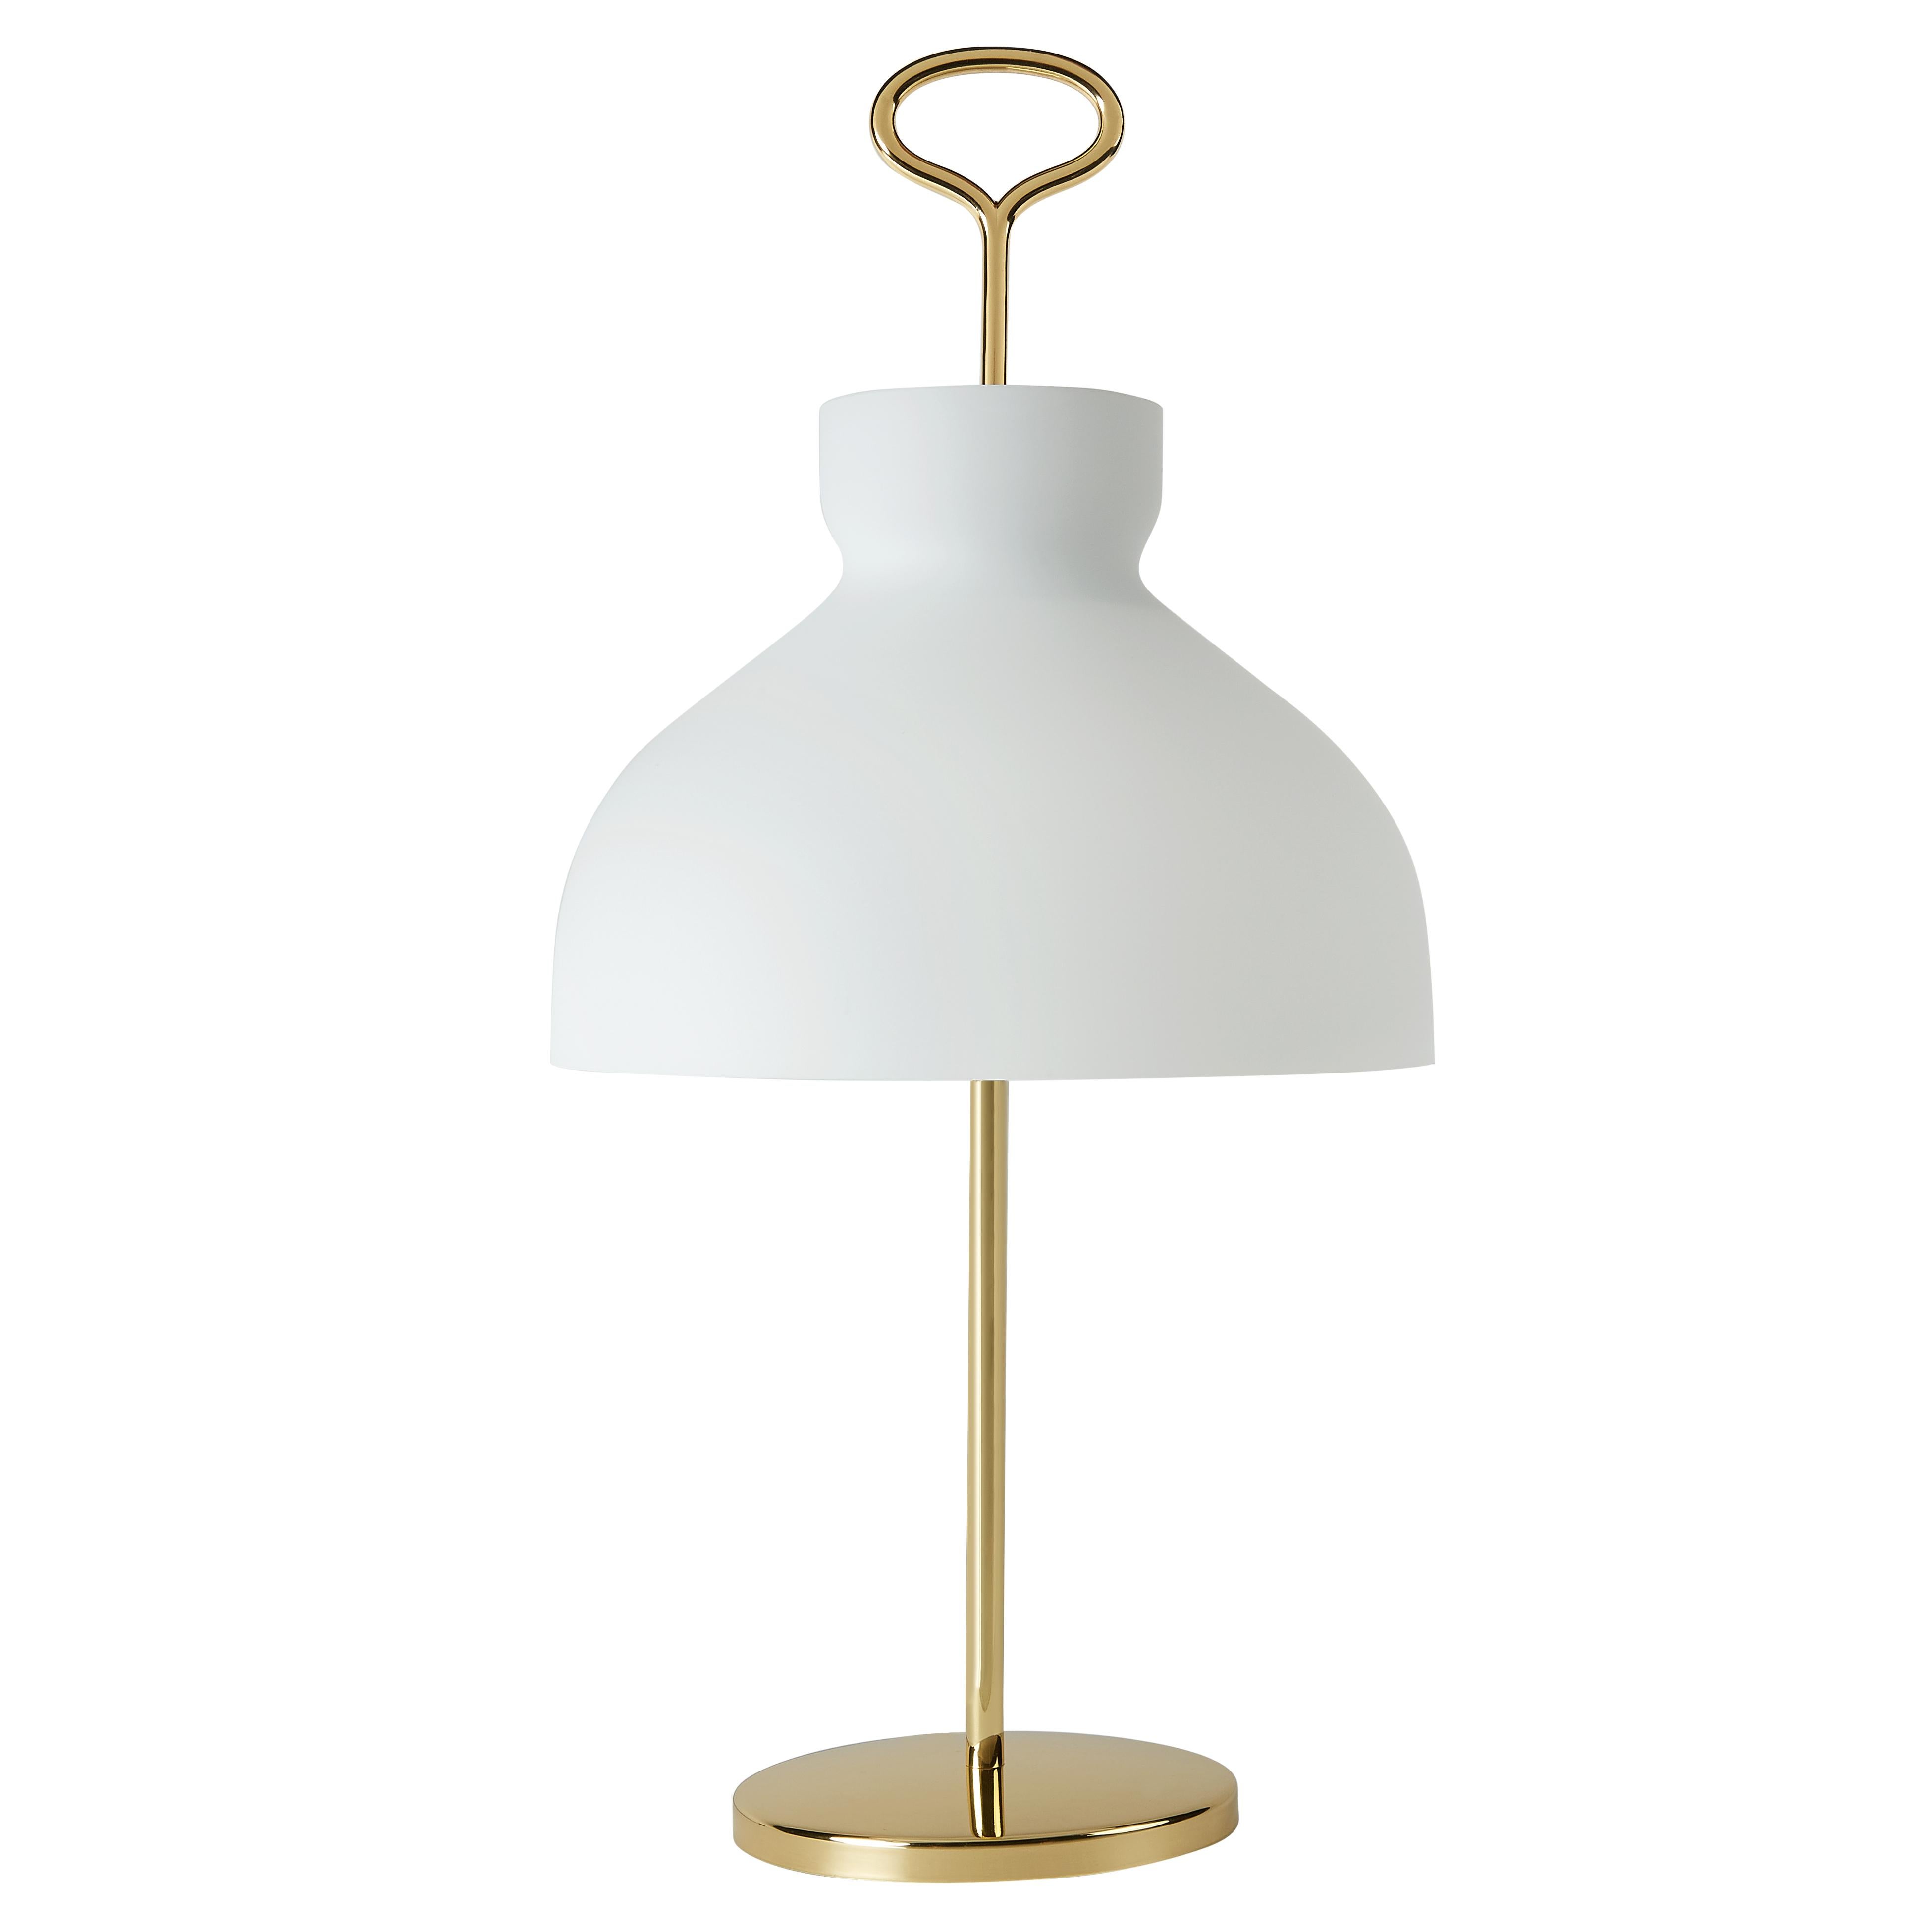 Opaline Glass Large Ignazio Gardella 'Arenzano' Table Lamp in Satin Bronze and Glass For Sale